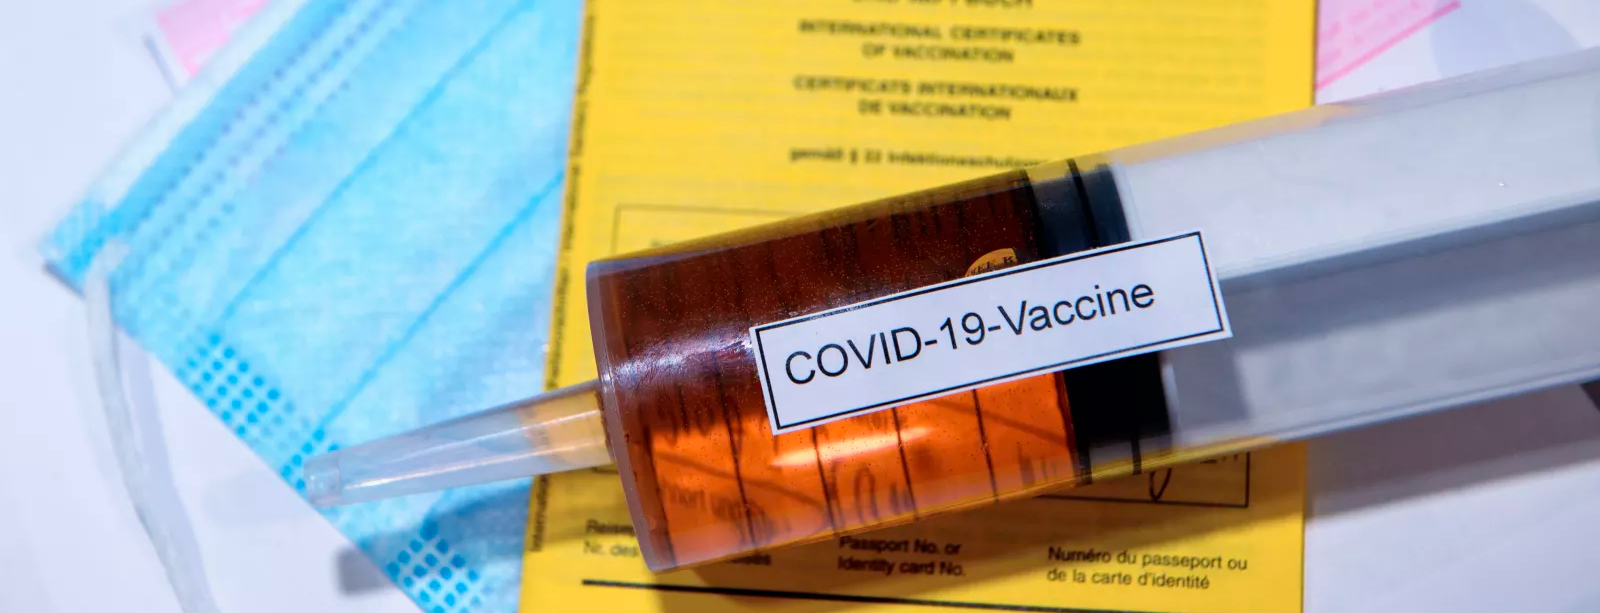 Impfung gegen das Corona-Virus